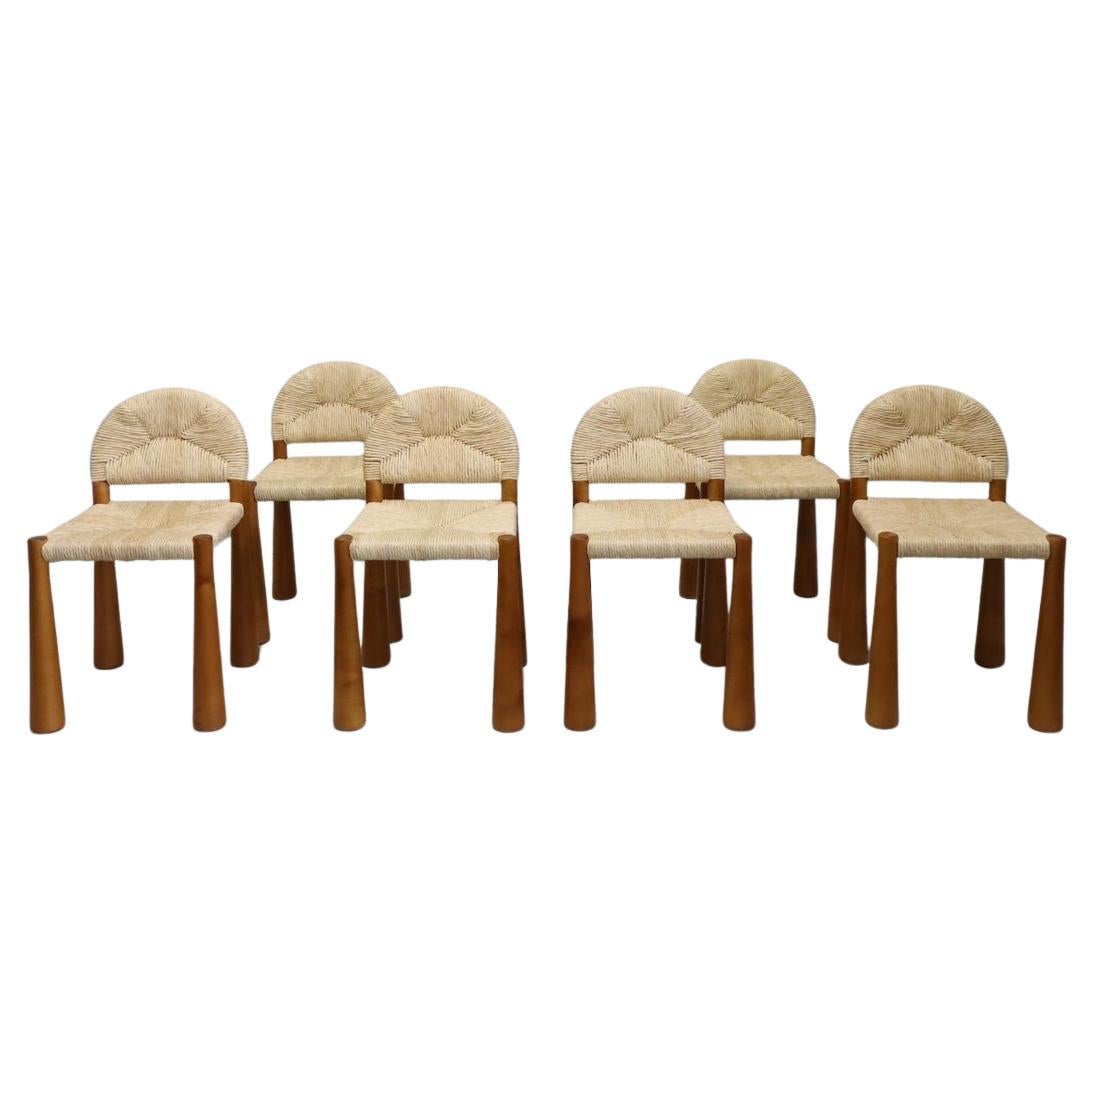 Alessandro Becchi Chairs